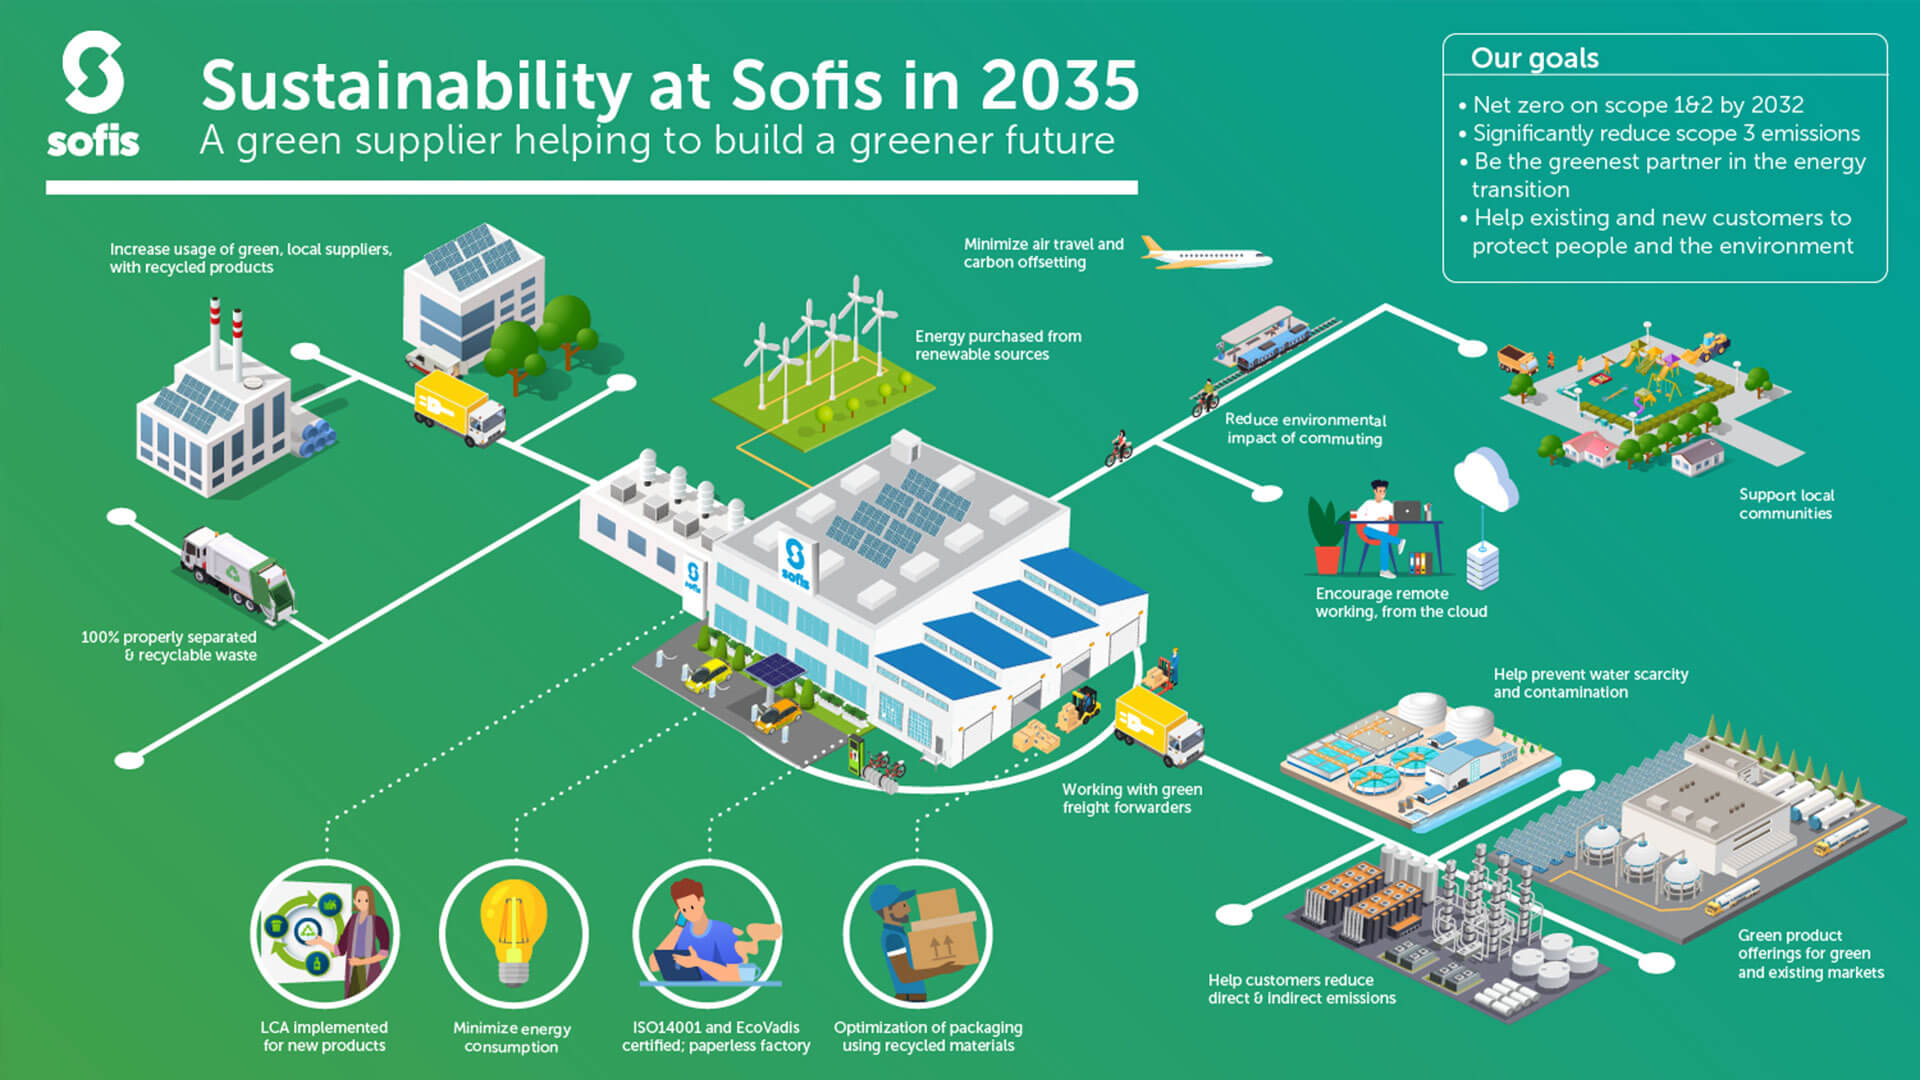 Sofis sustainability strategy